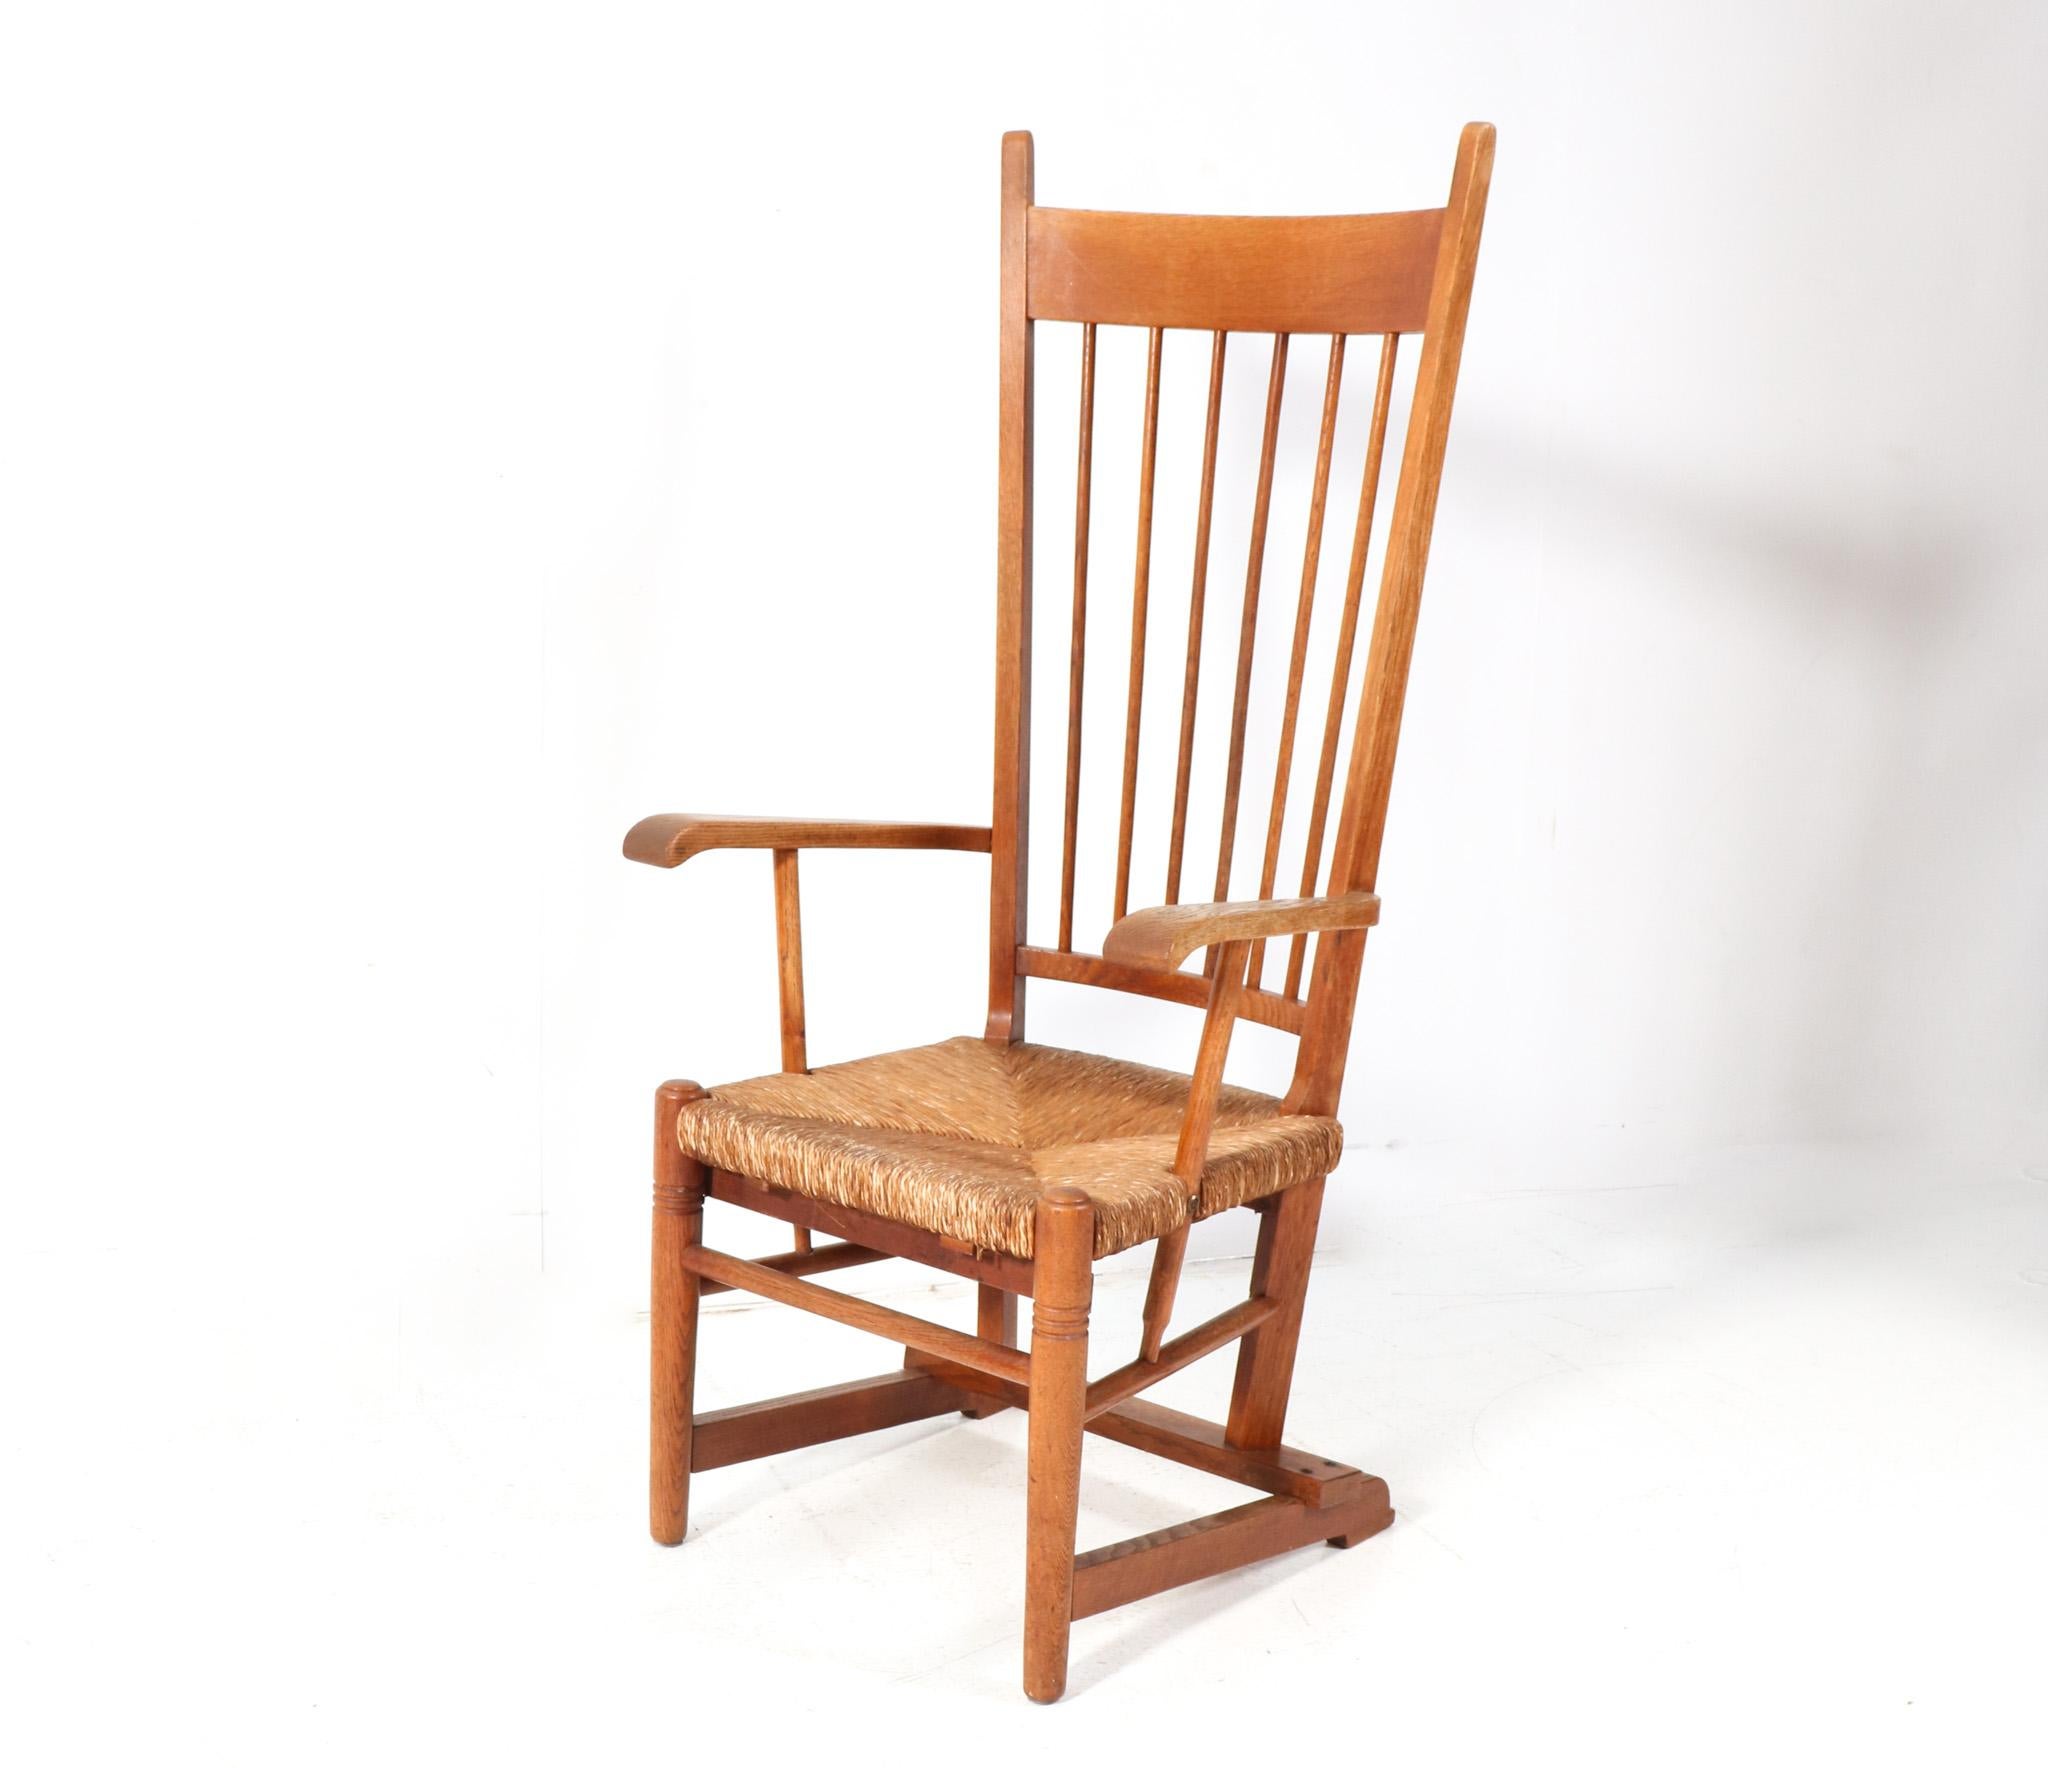 Dutch Oak Arts & Crafts Art Nouveau High Back Armchair with Rush Seat, 1900s For Sale